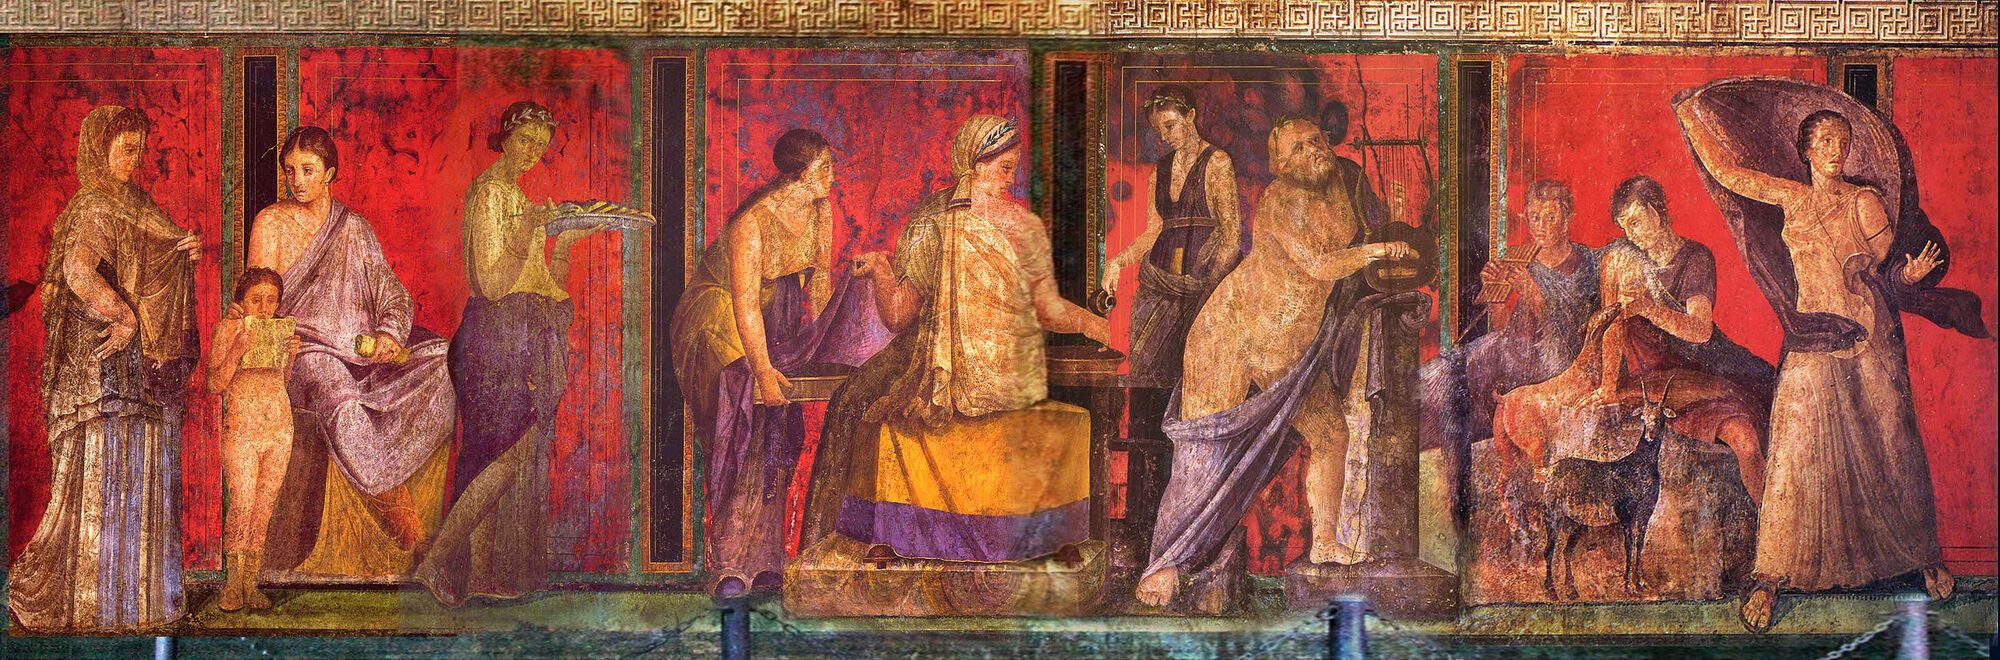 Фрески в Помпеях почистят лазером